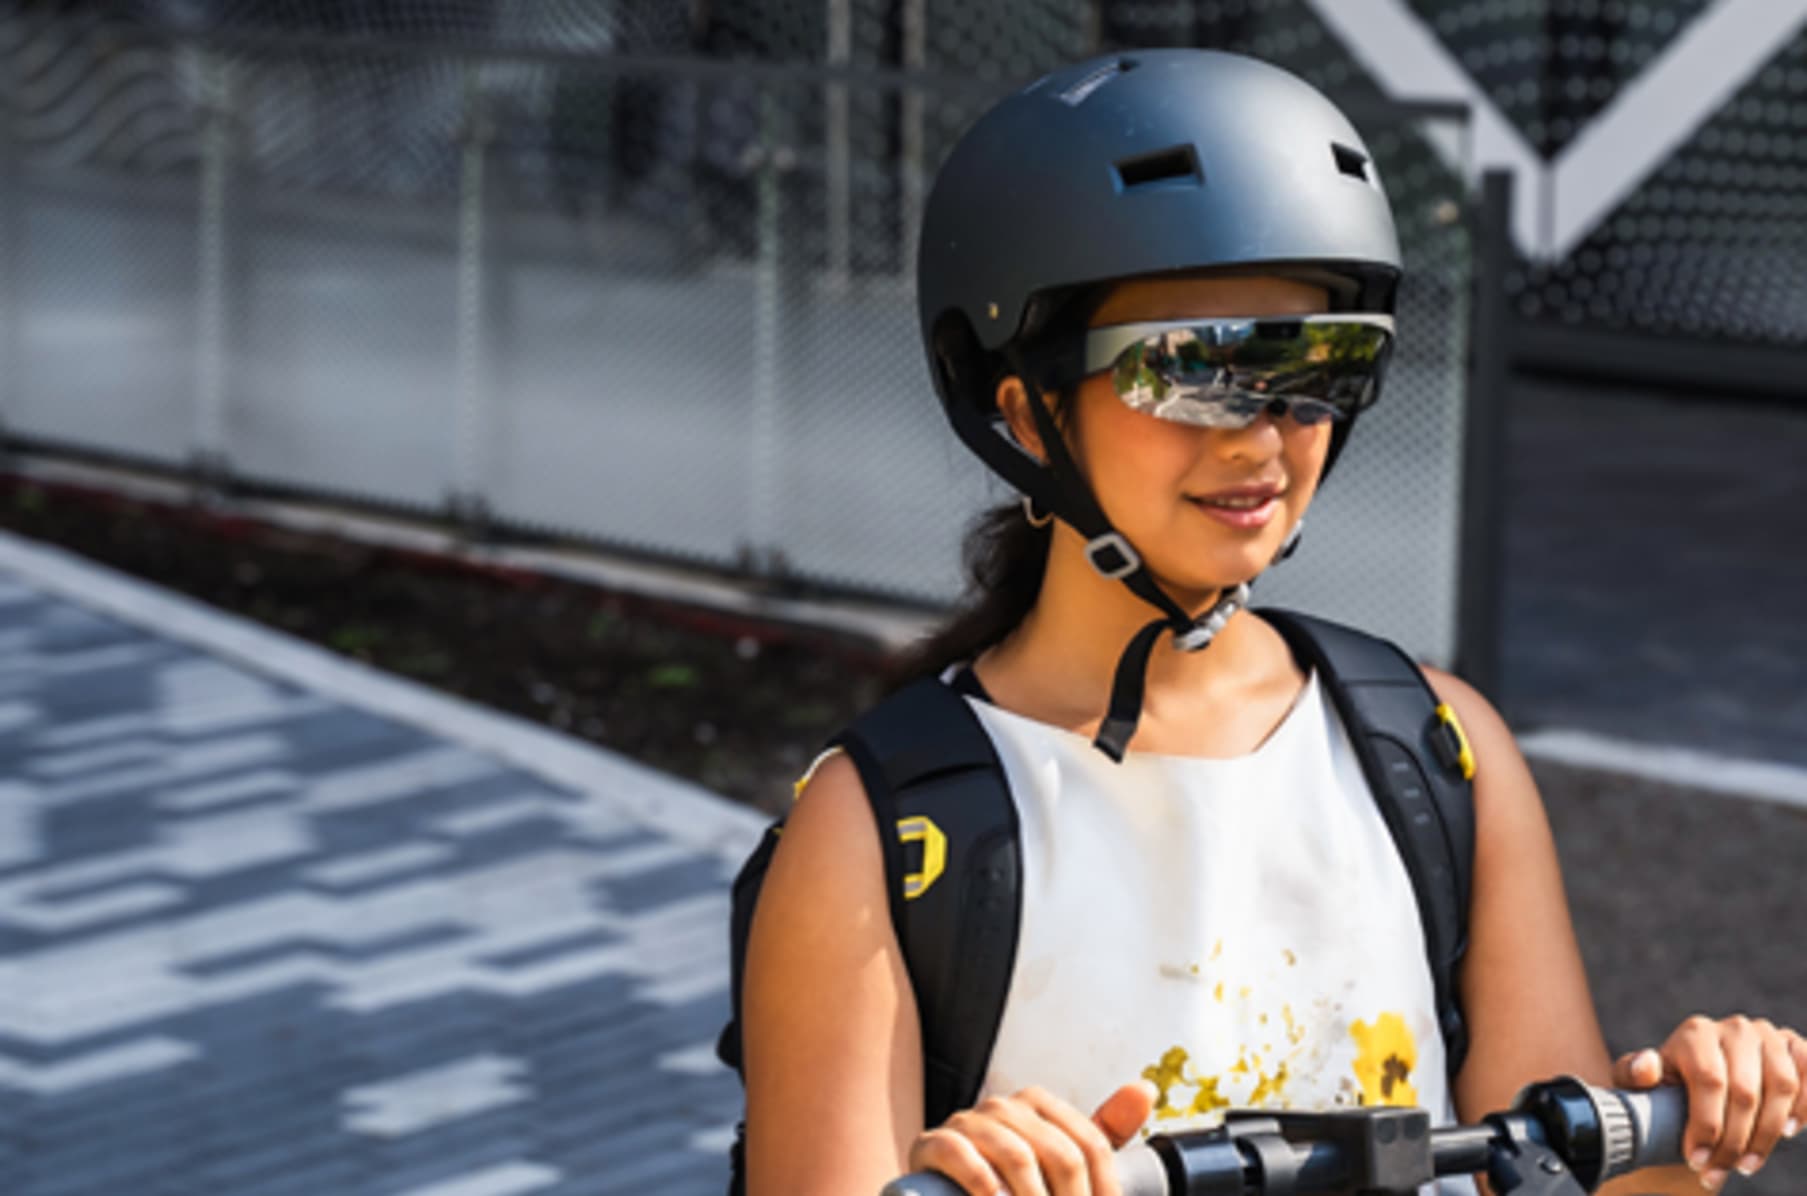 AR Biking Glasses Raptor AR Start At $499, Shipping Next Year